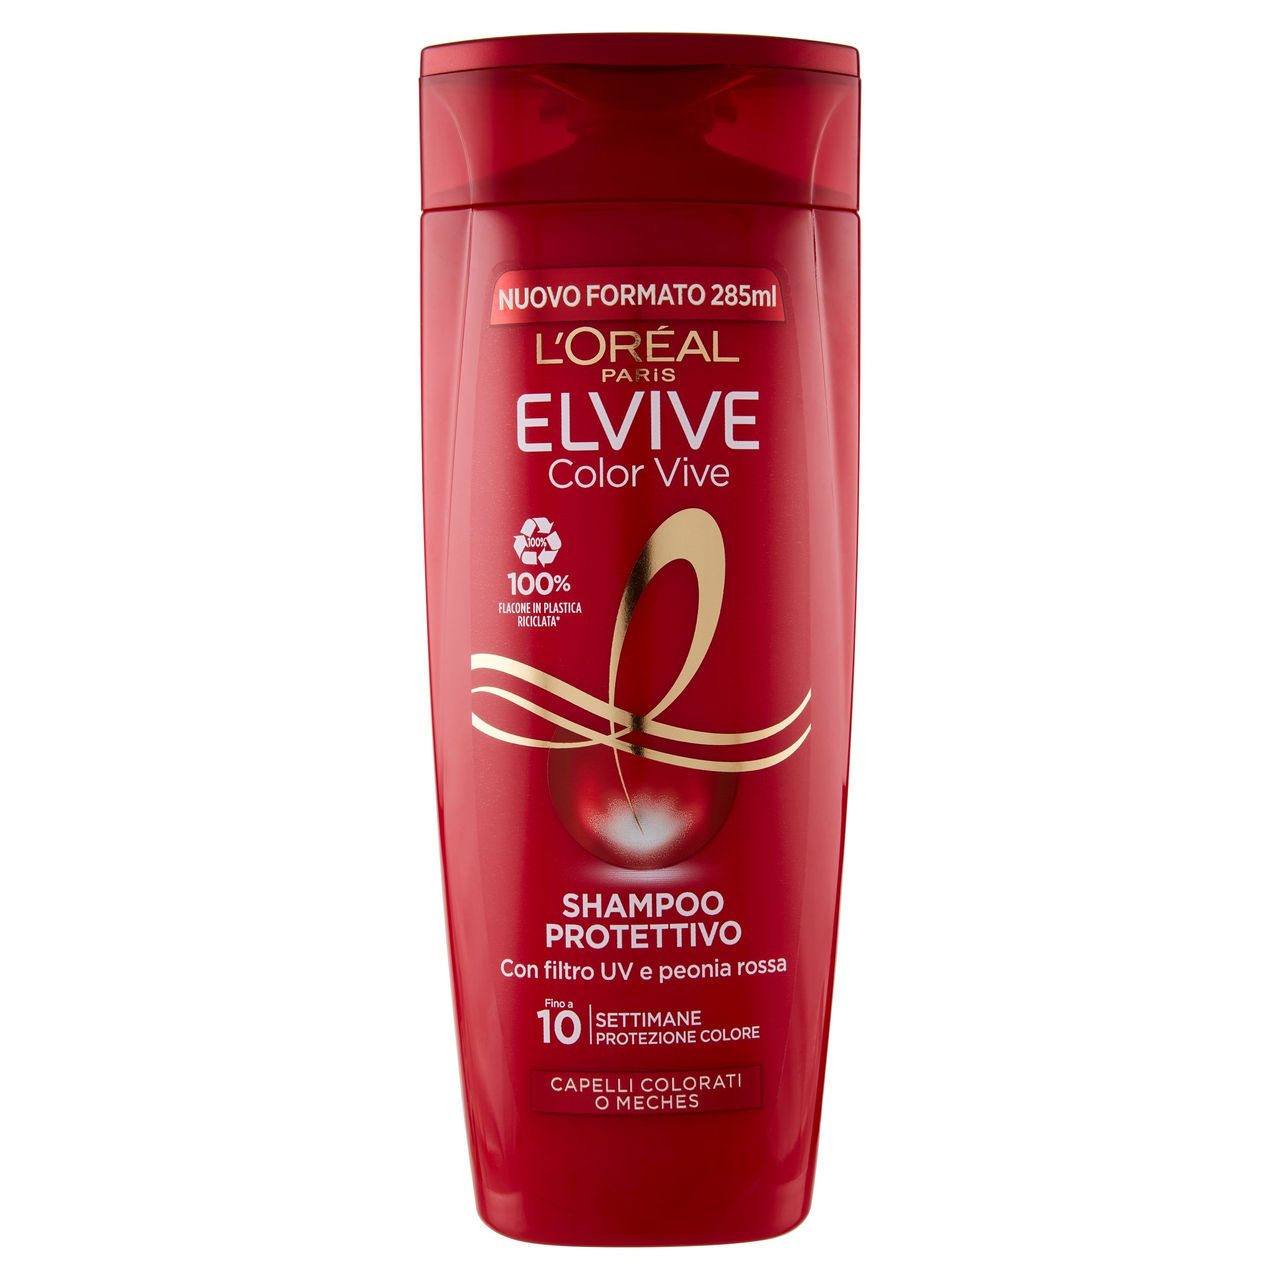 Shampoo Elvive Color Vive in vendita online